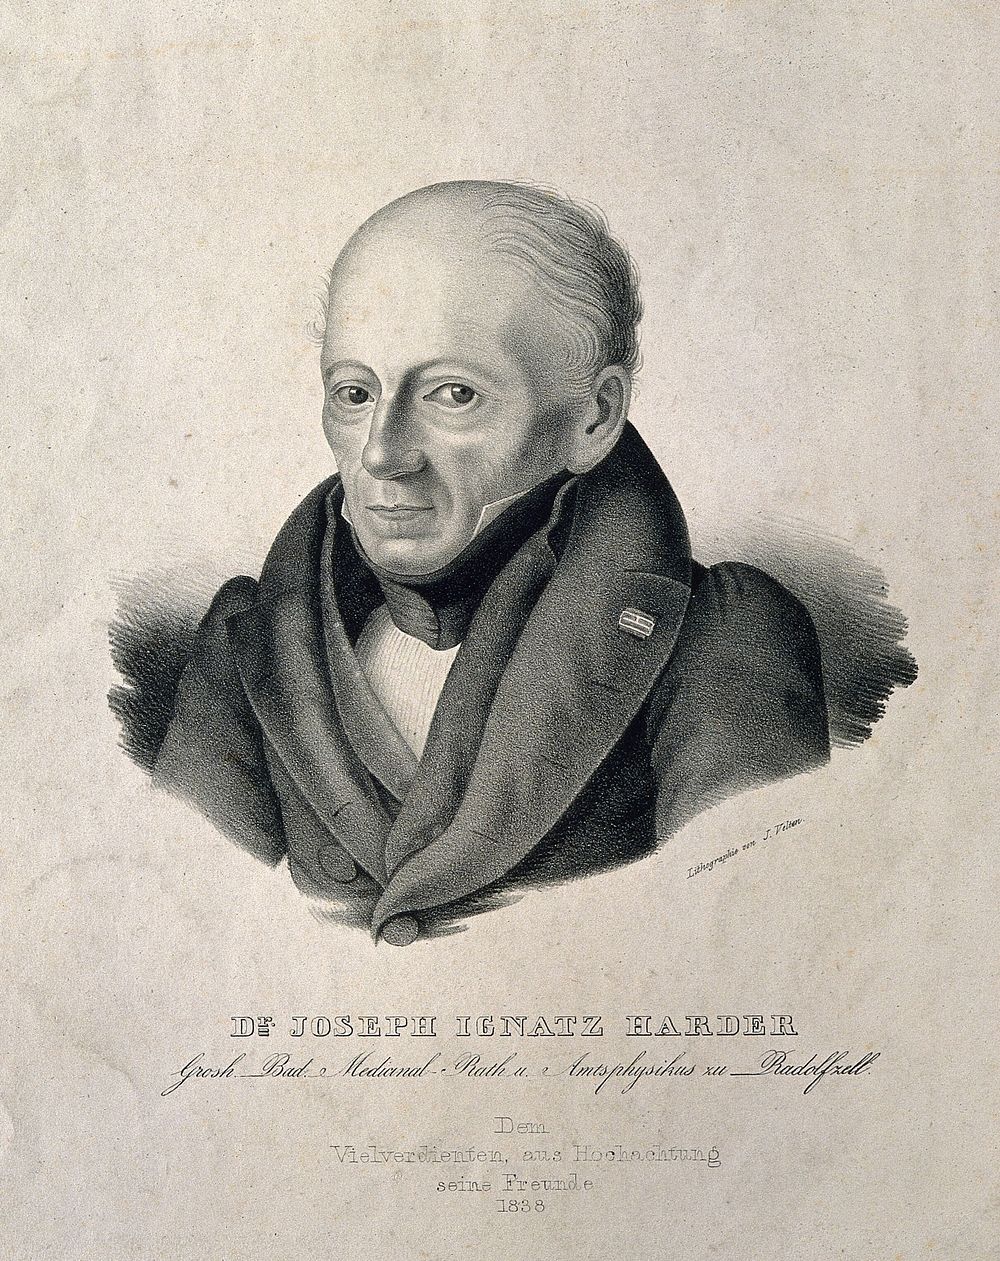 Joseph Ignatz Harder. Lithograph, 1838.